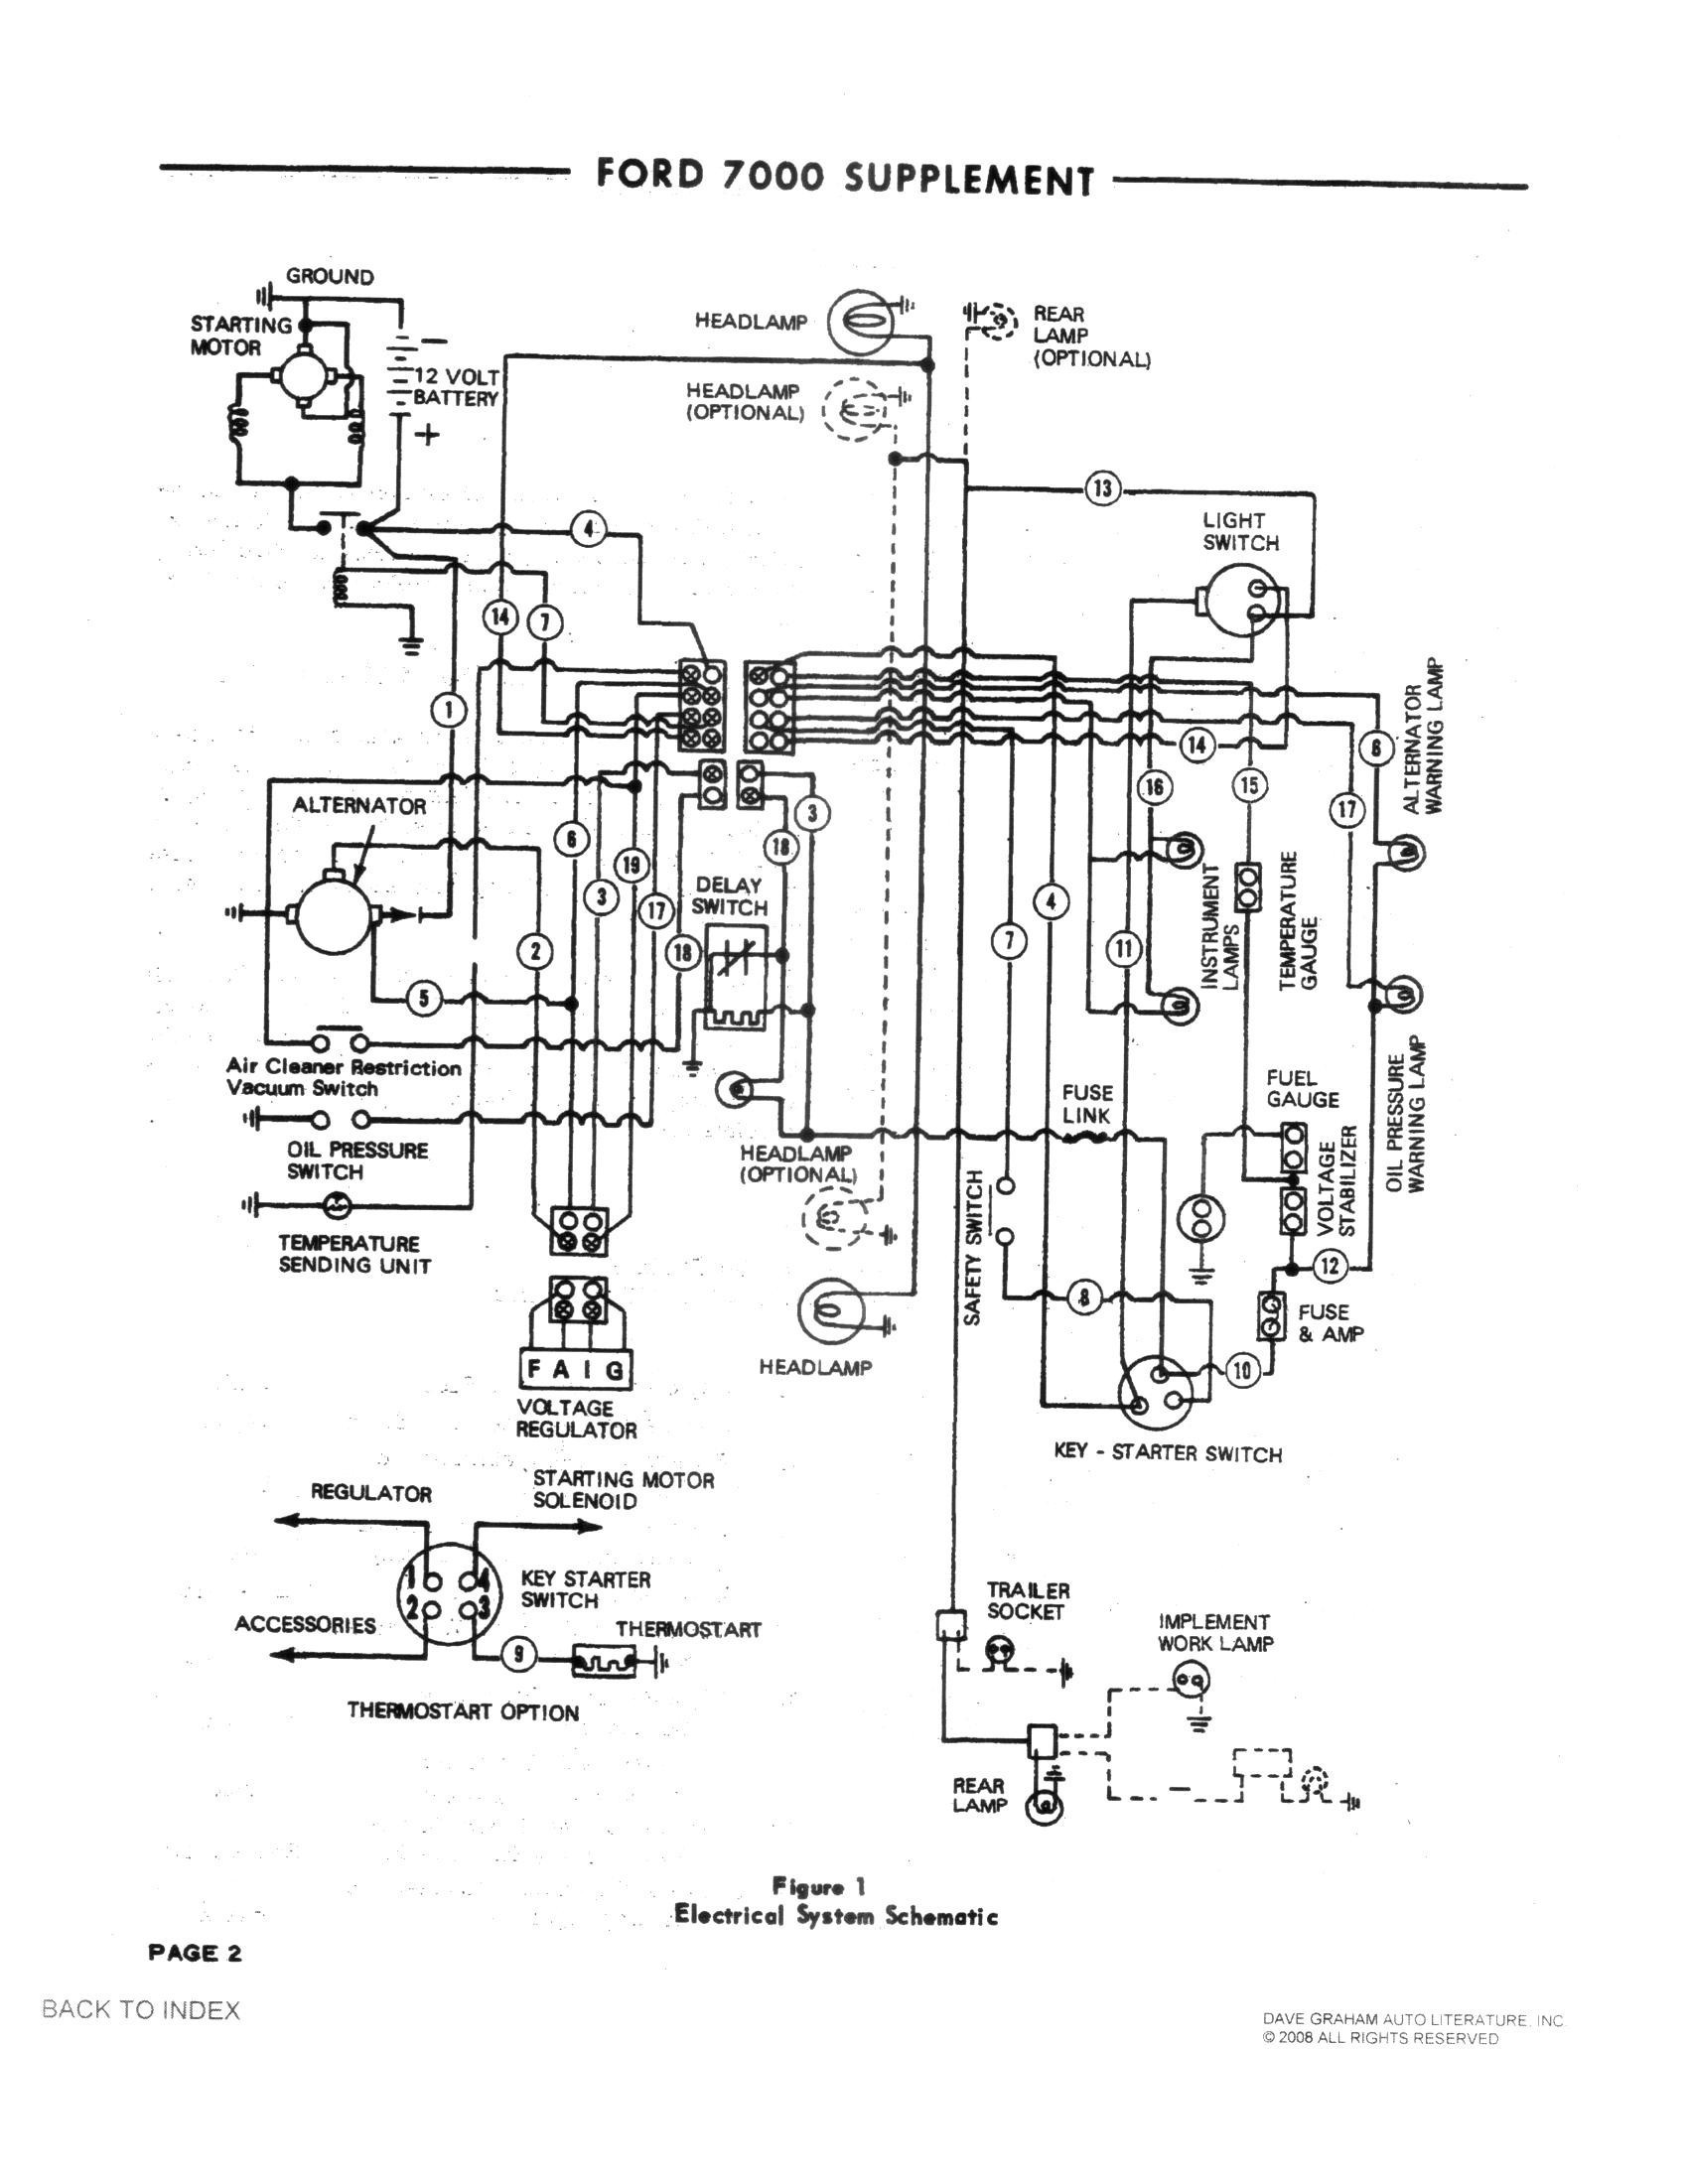 Wiring Diagram for Automotive Alternator New Wiring Diagram Alternator Voltage Regulator Best Lucas Voltage